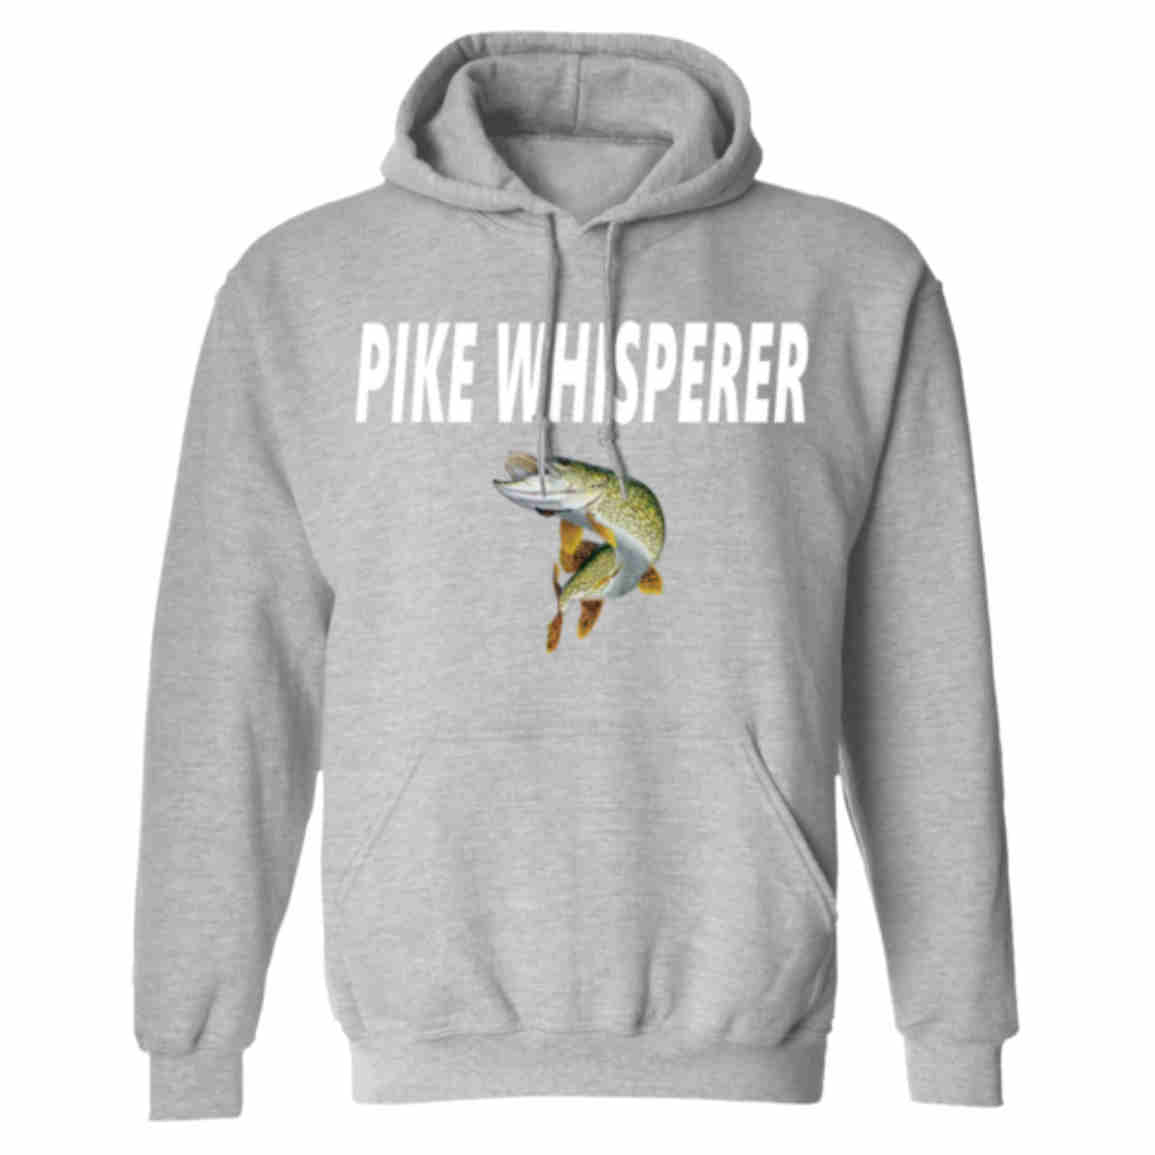 Pike whisperer hoodie w sport-grey